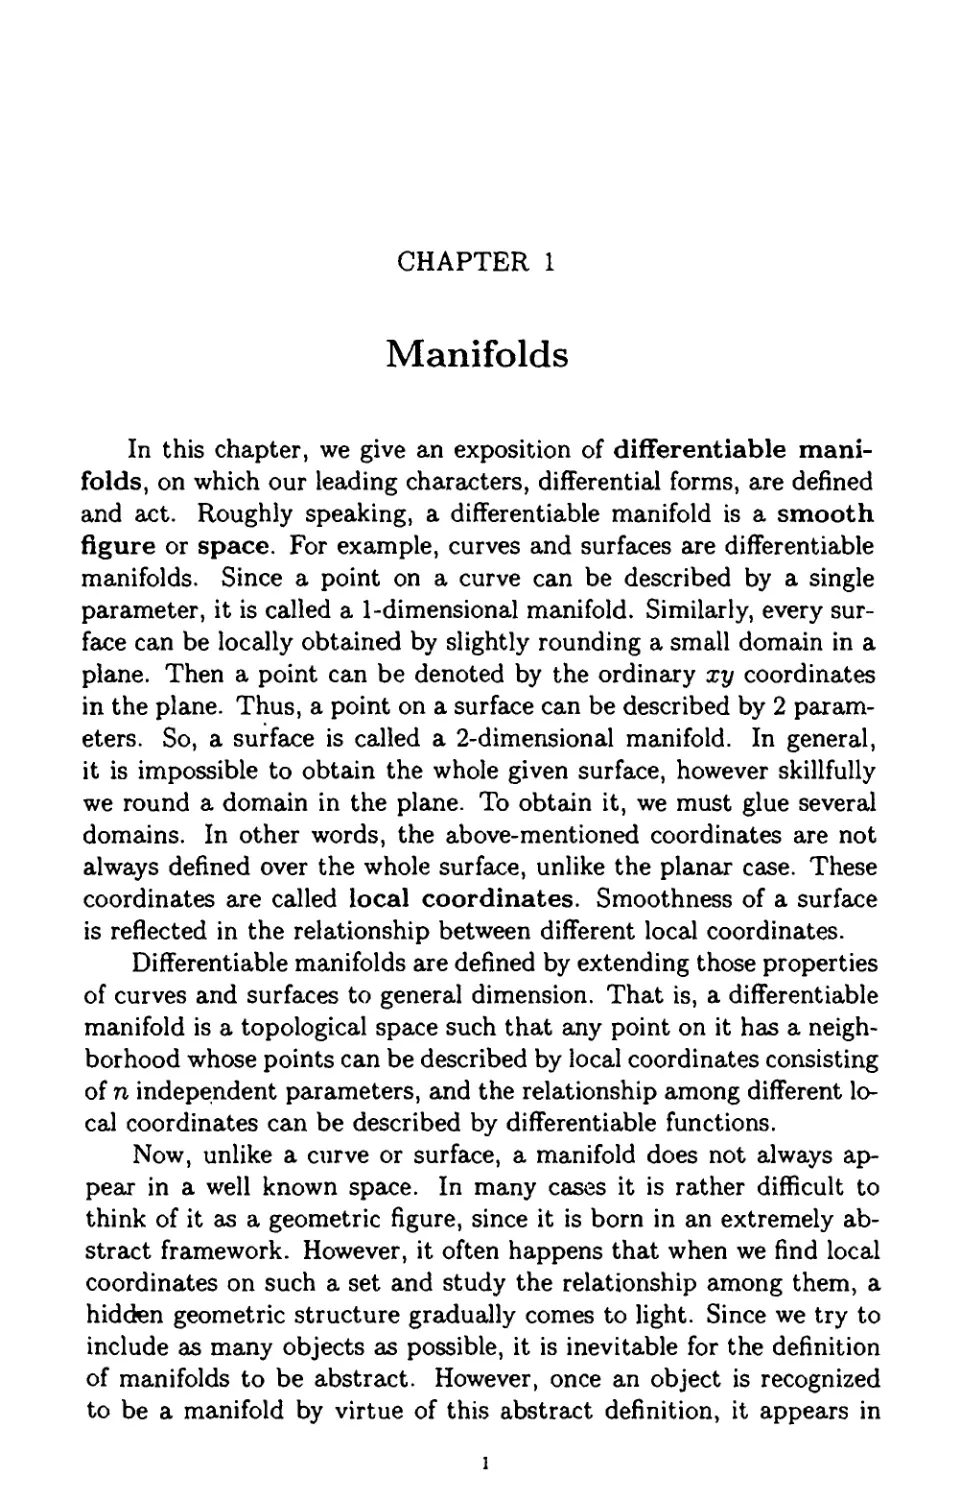 Chapter 1 Manifolds